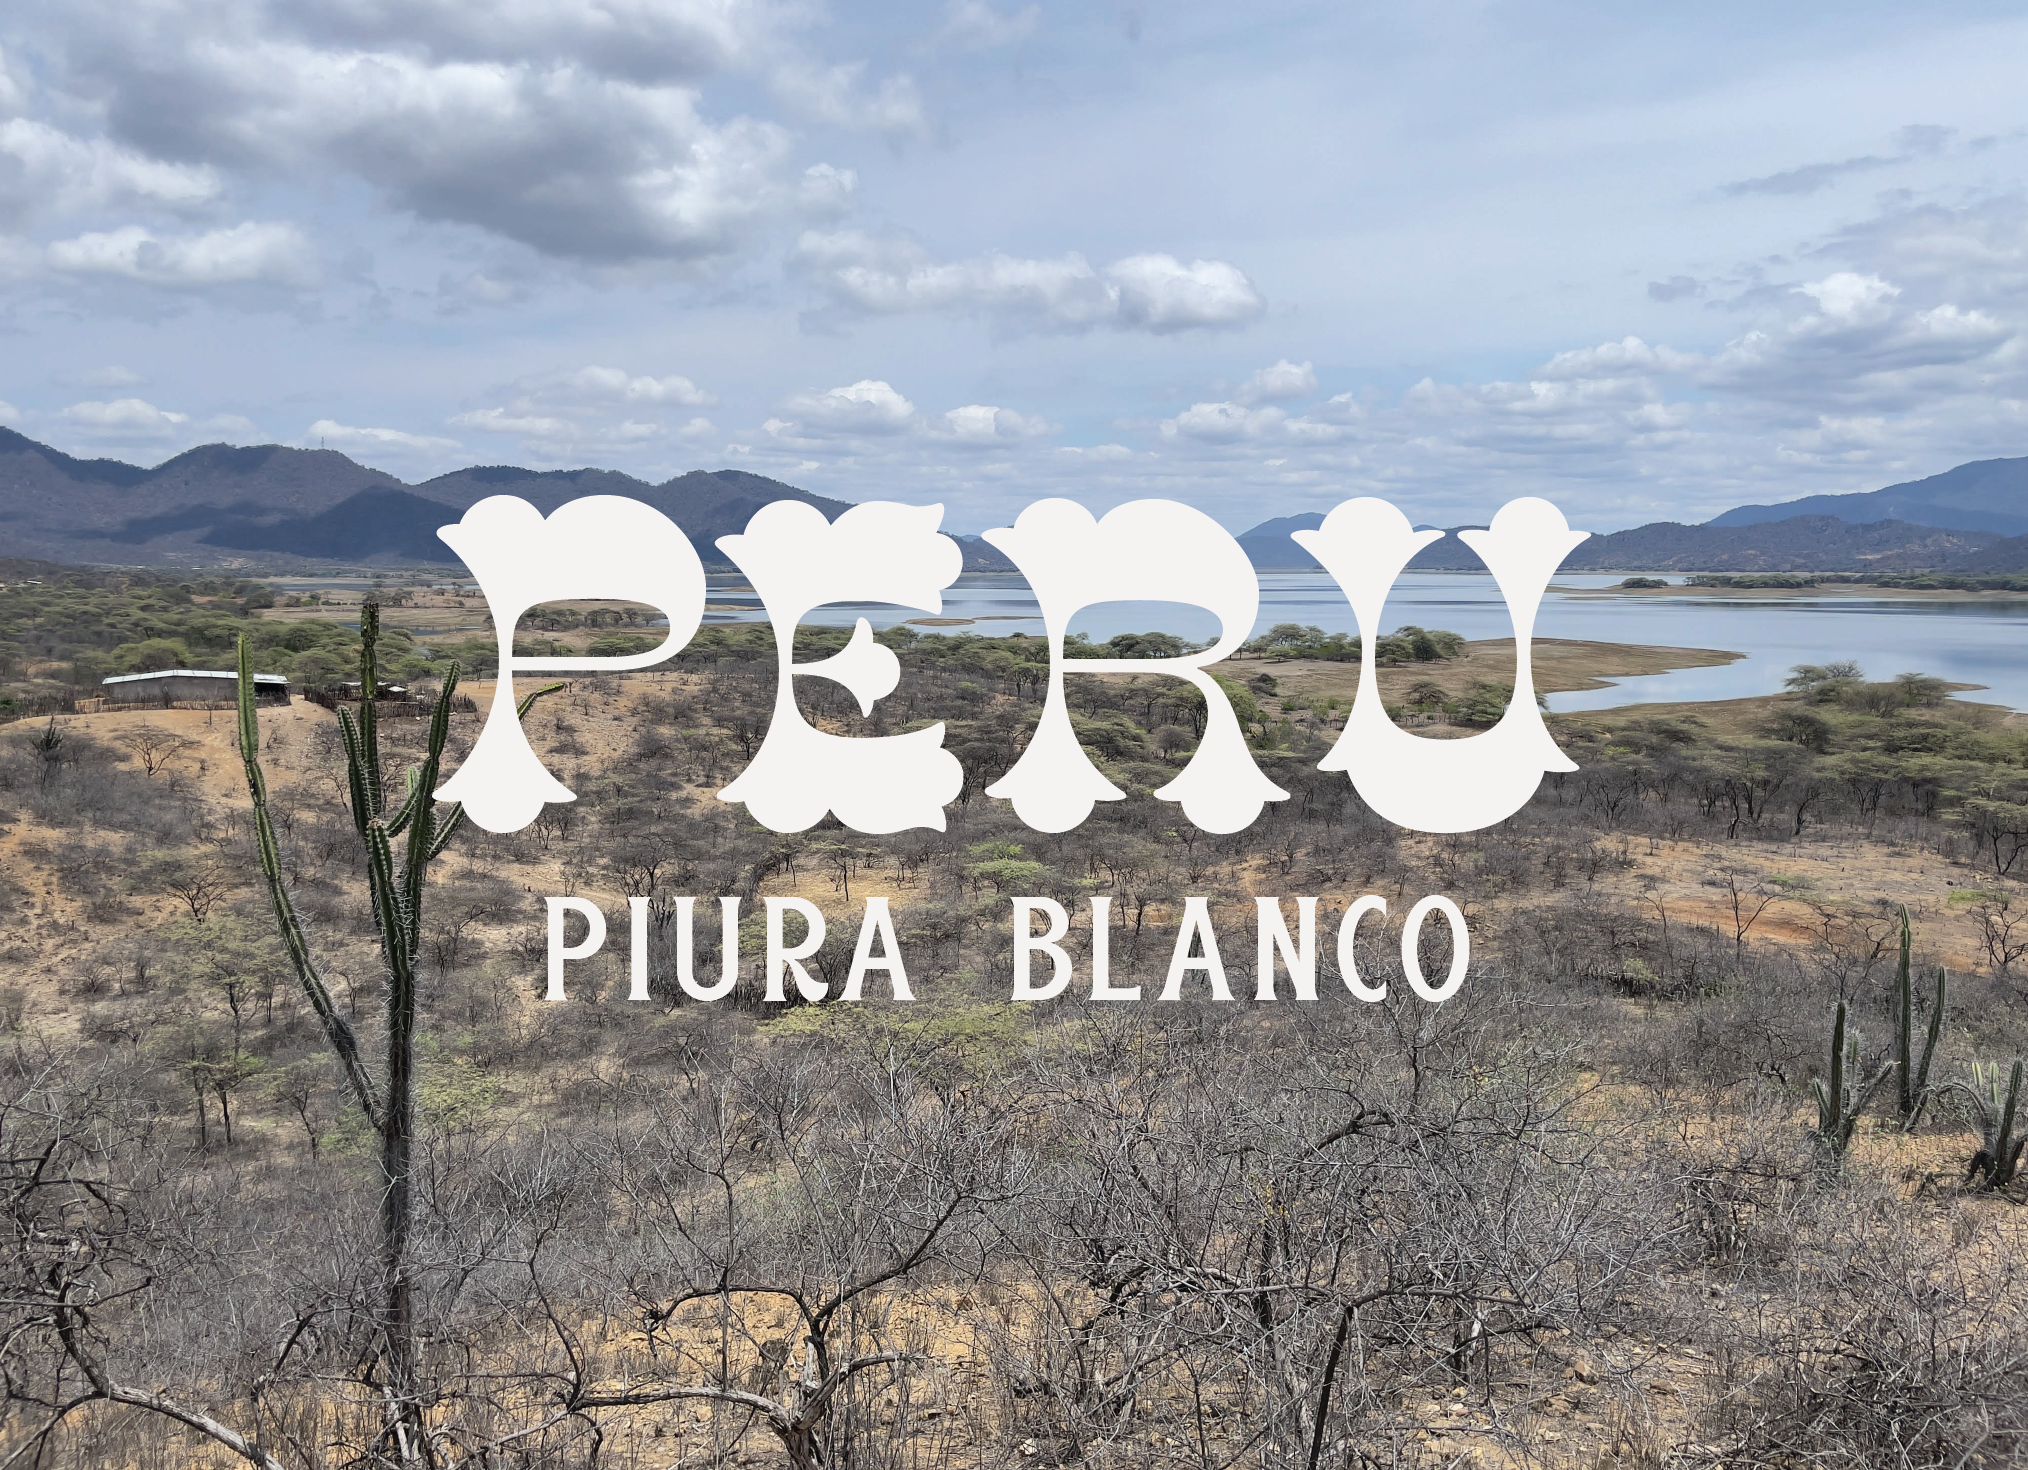 Piura Blanco Peru button